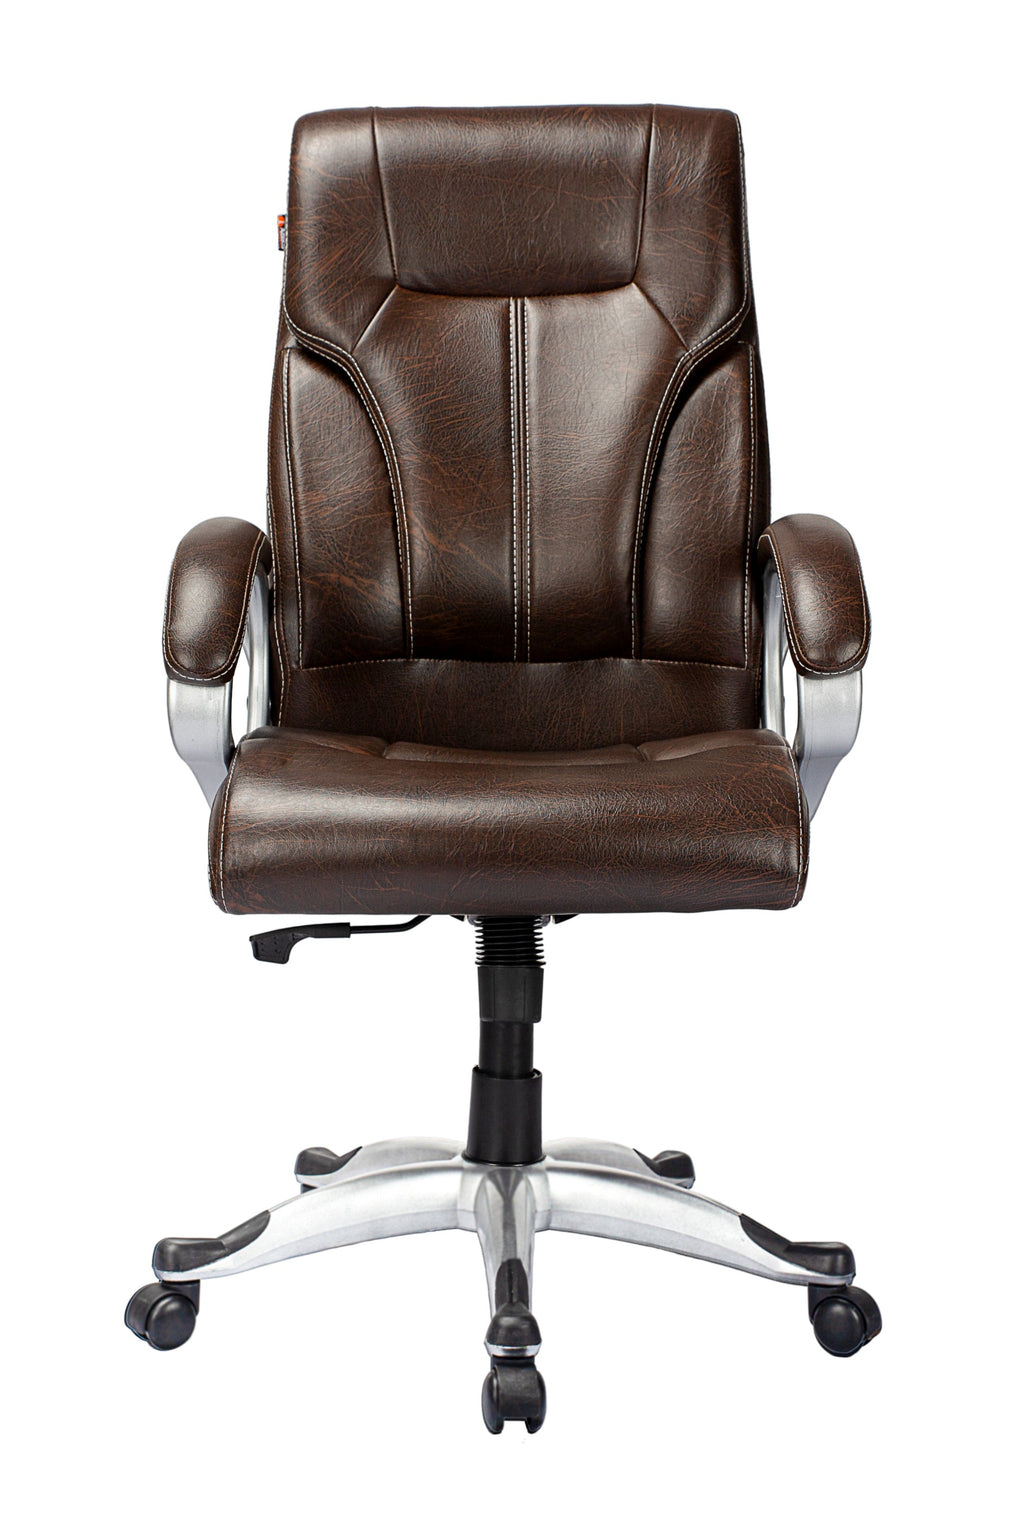 Detec™ Adiko Comfortable Executive Revolving Office Chair